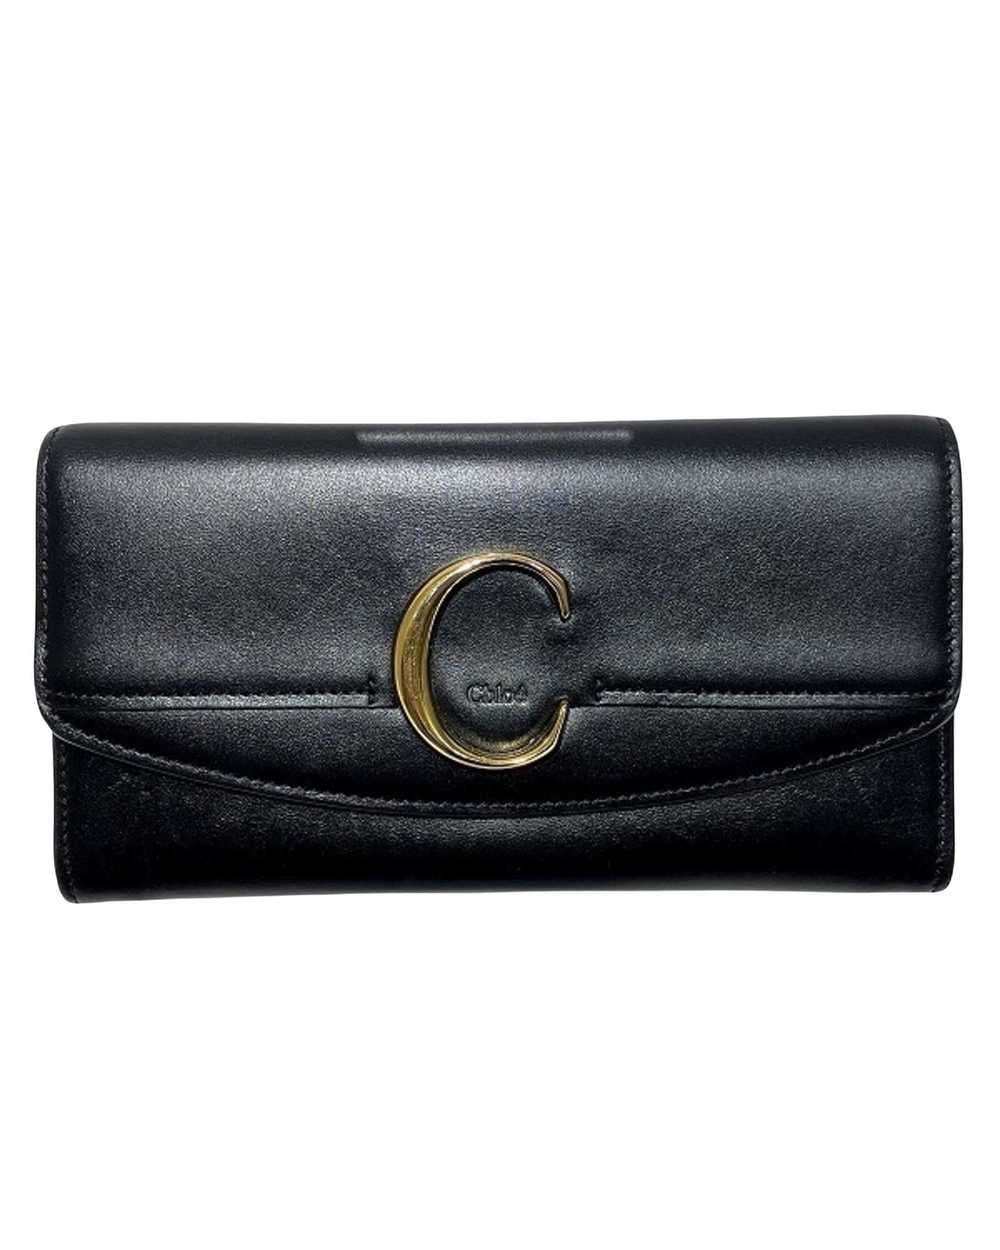 Chloe Refined Black Leather Long Wallet for Women - image 1